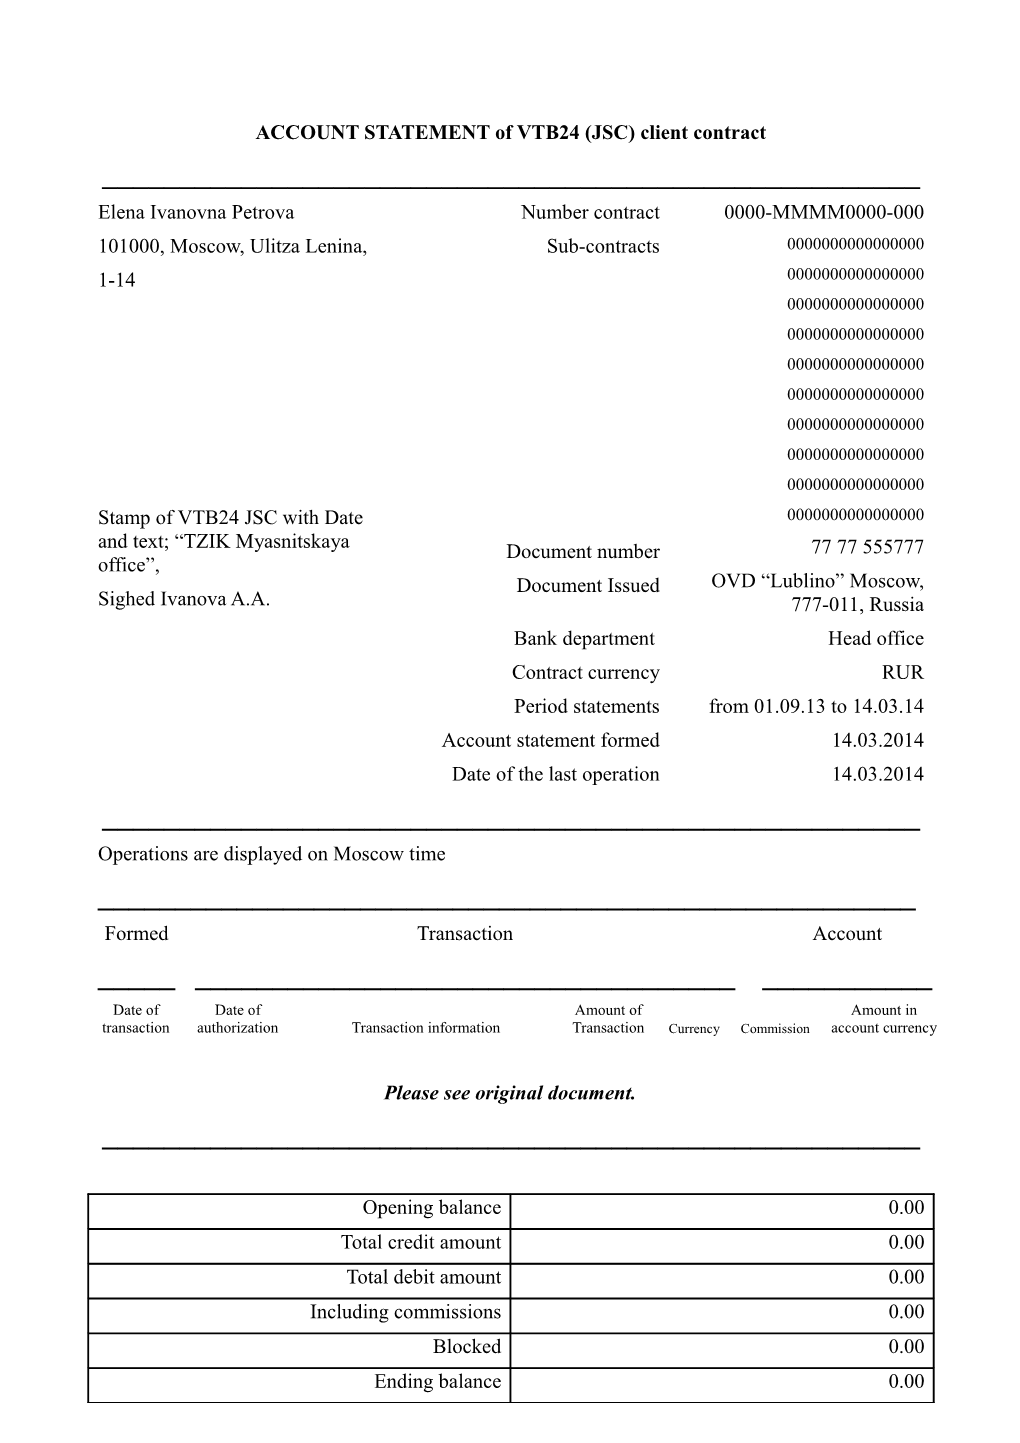 ACCOUNT STATEMENT of VTB24 (JSC) Client Contract